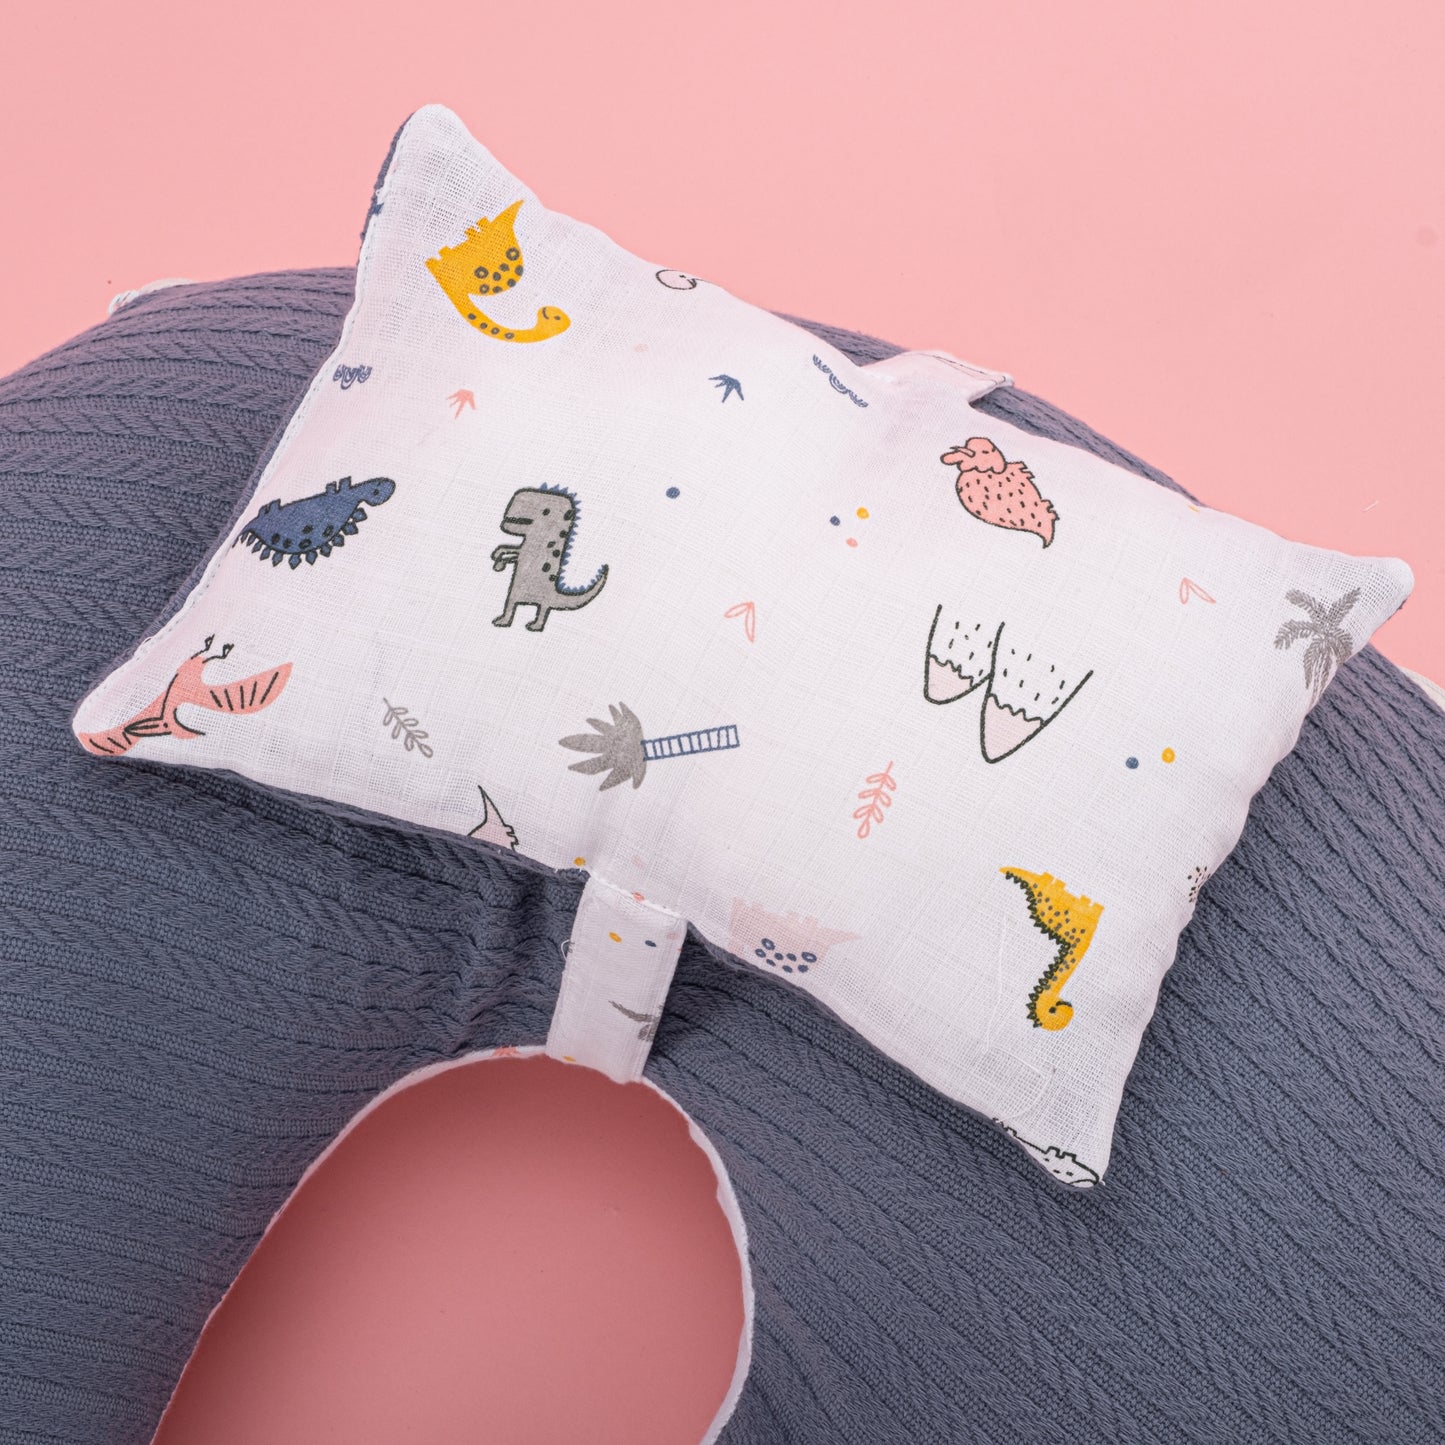 Breastfeeding Pillow - Indigo Knitting - Dinosaur